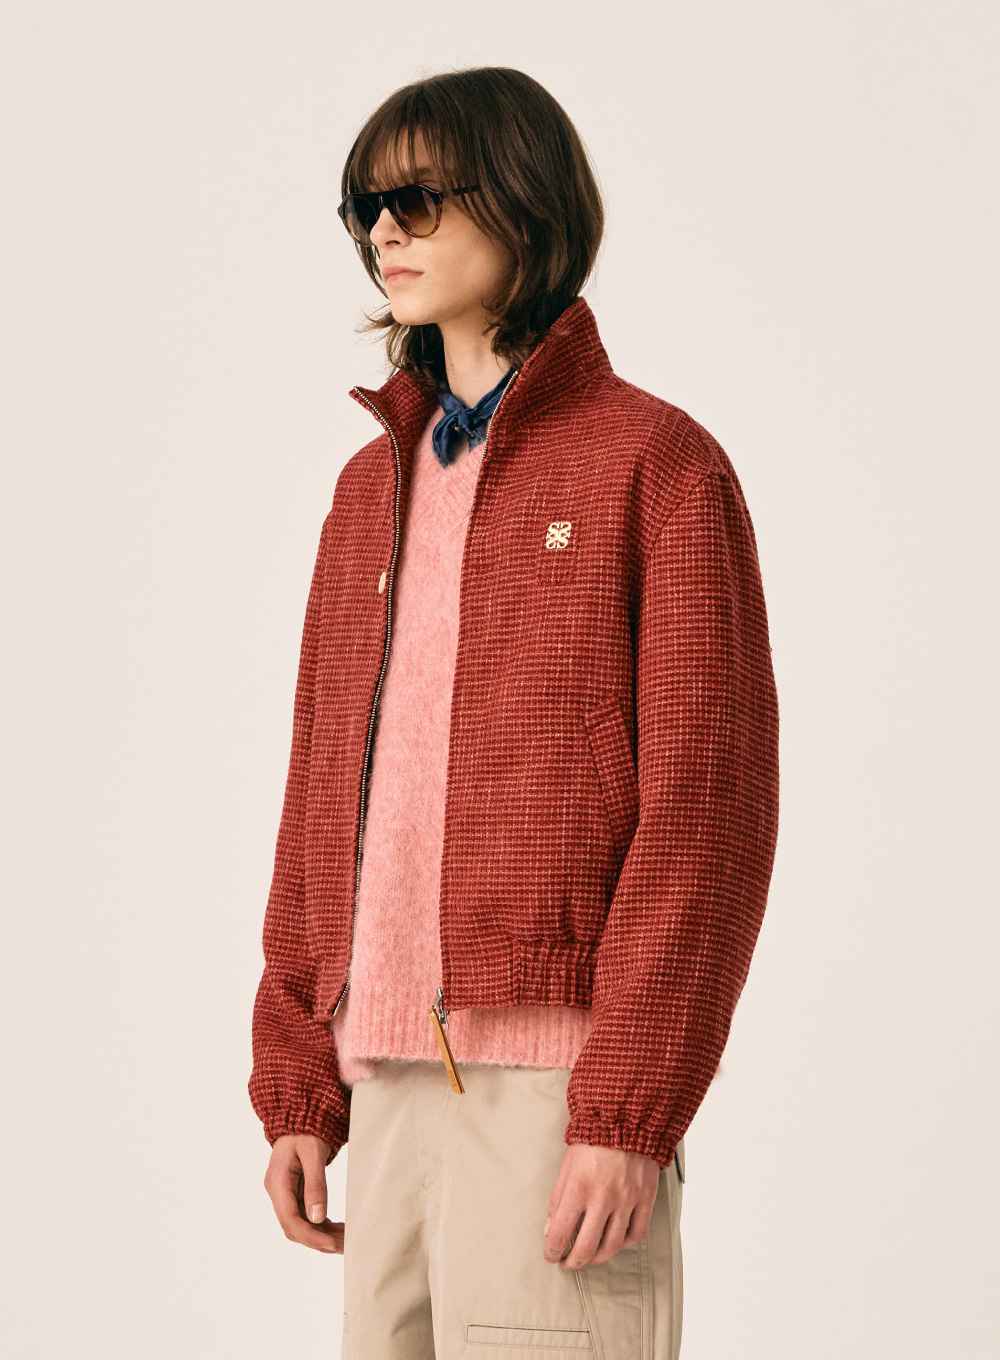 Lecce Tweed Zip-Up Jacket - Burgundy Red